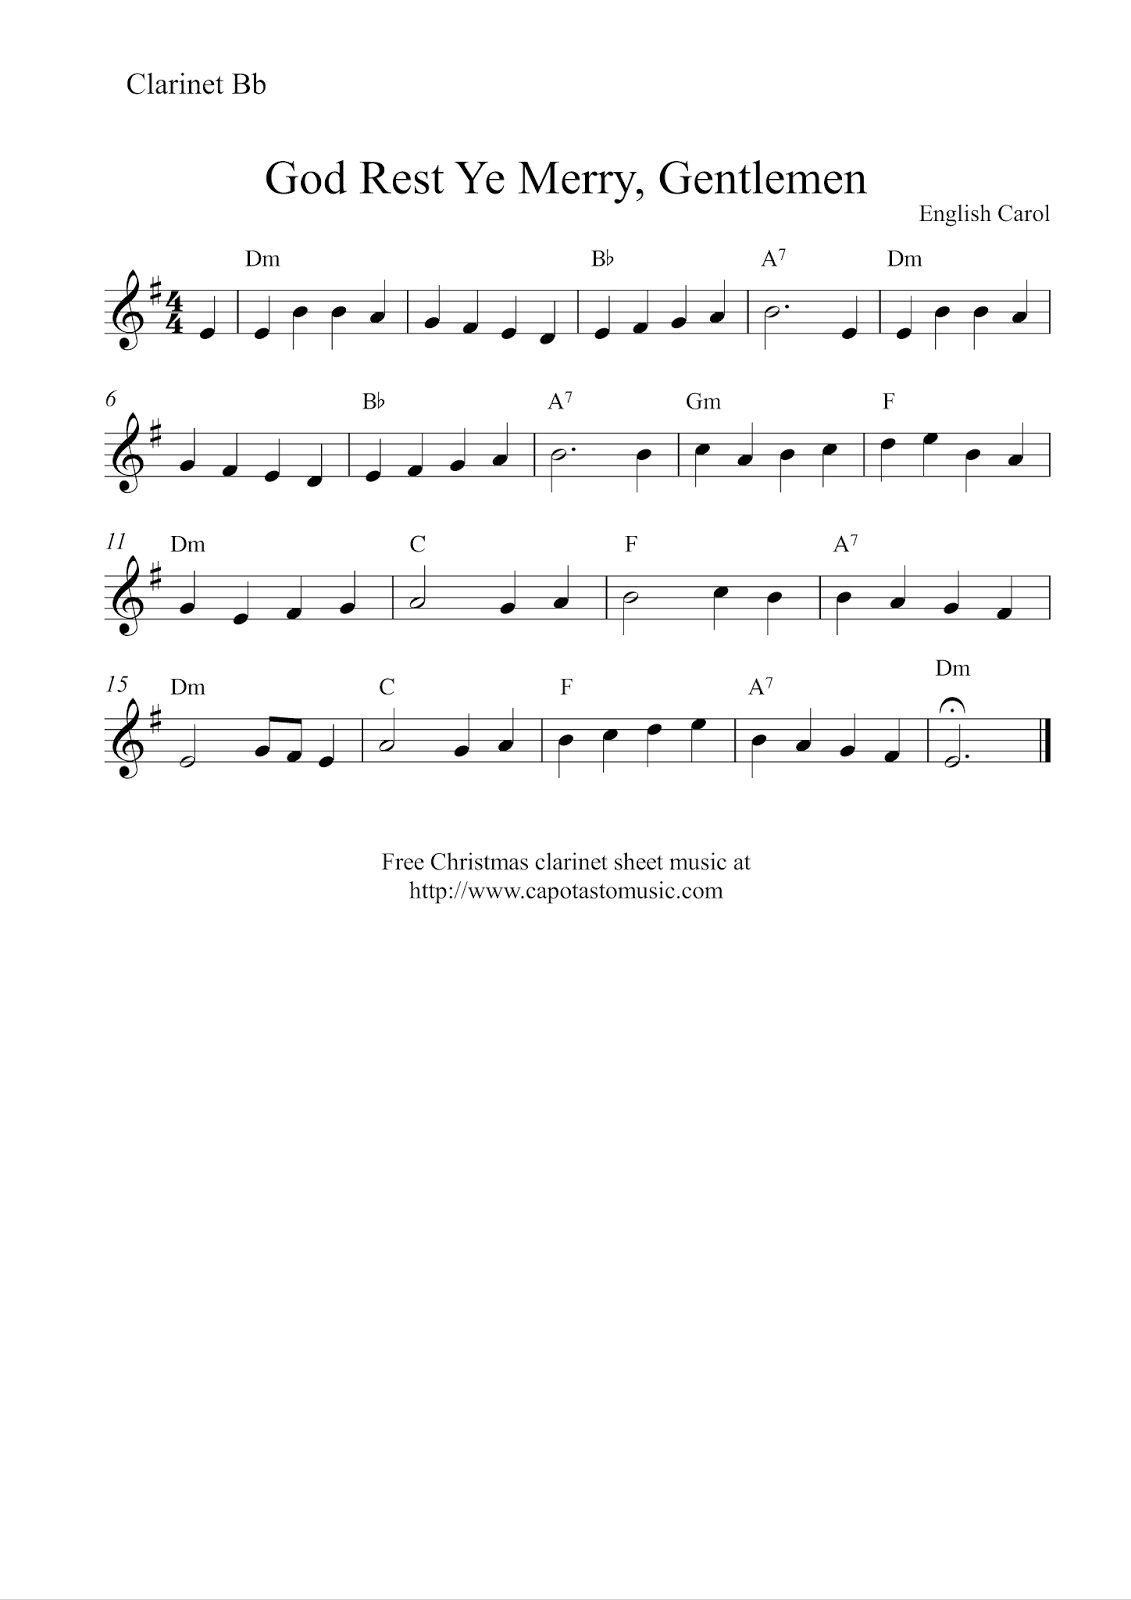 Free Christmas Clarinet Sheet Music - God Rest Ye Merry, Gentlemen - Free Printable Christmas Sheet Music For Clarinet